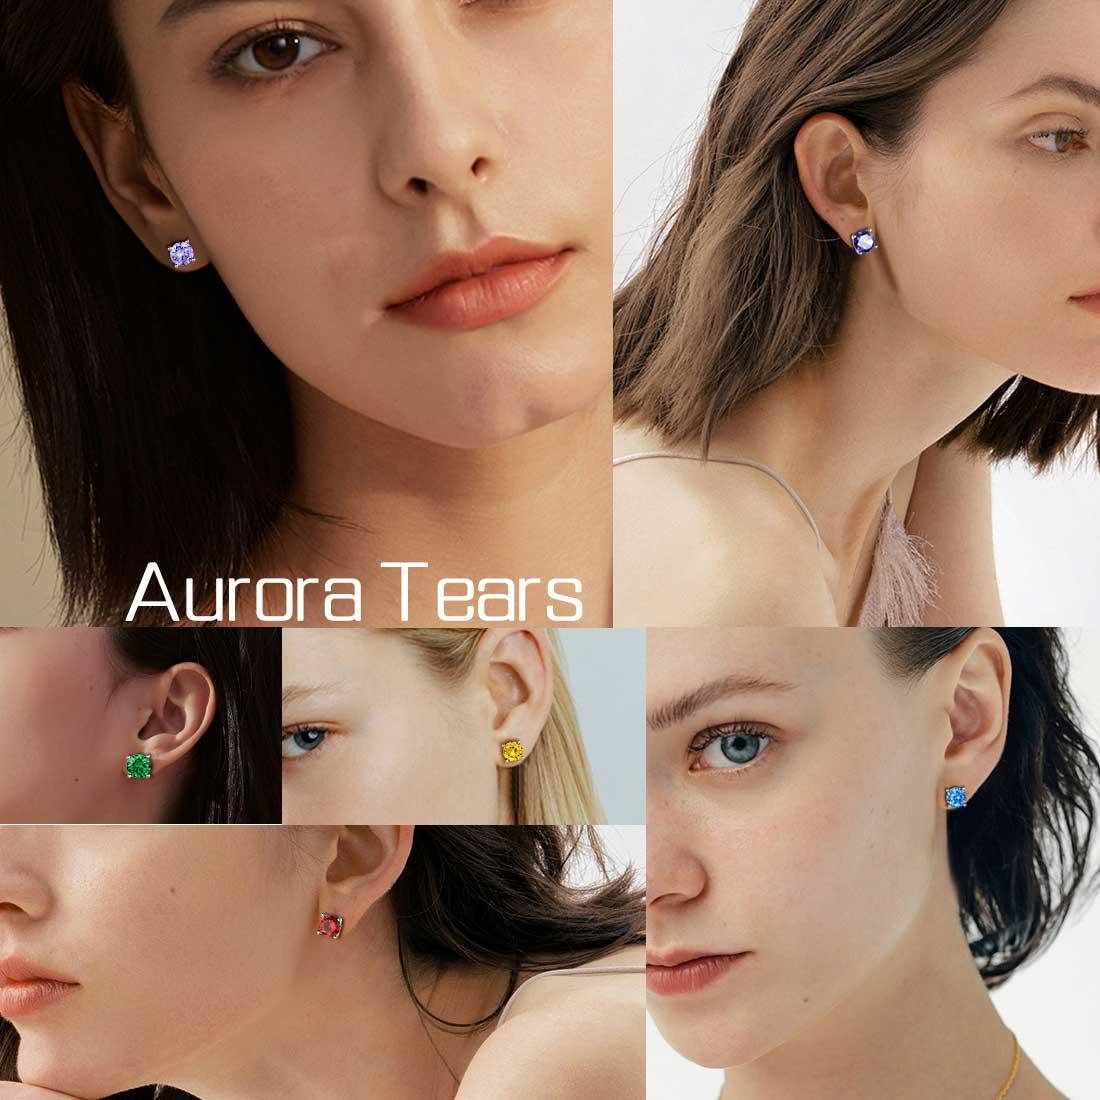 Round Birthstone January Garnet Earrings Sterling Silver - Earrings - Aurora Tears